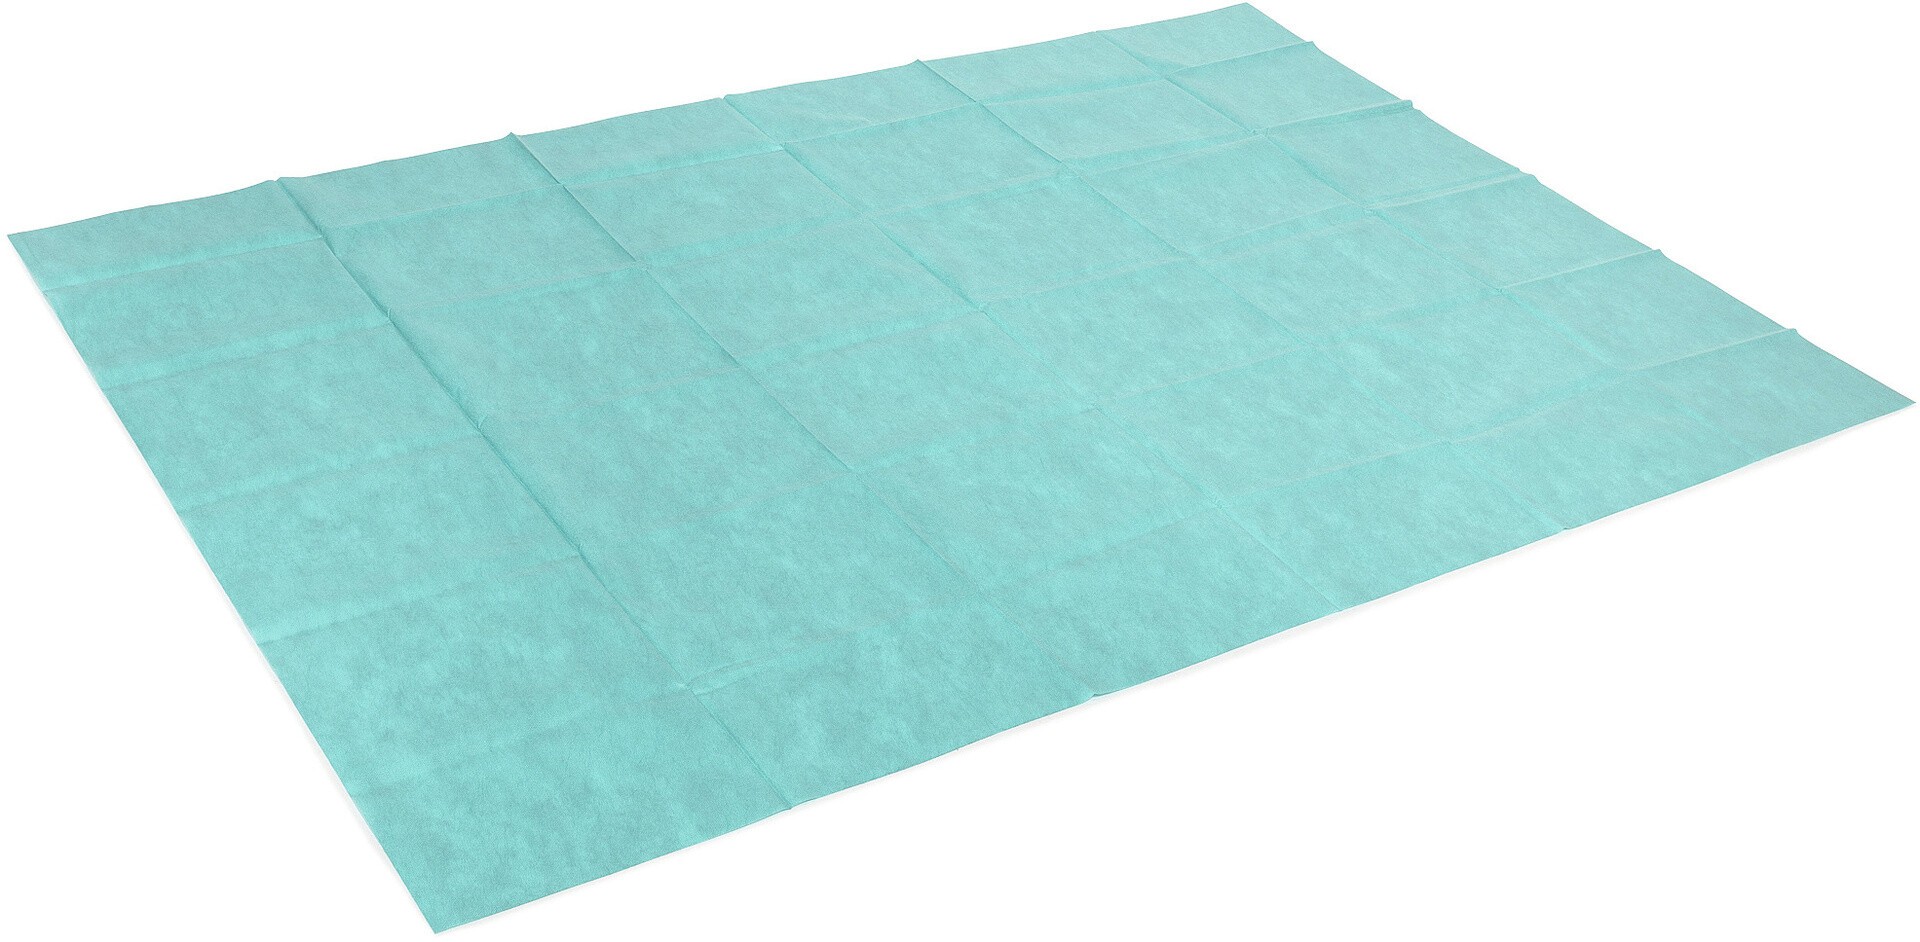 Foliodrape Protect table cloths 100cm x 150cm